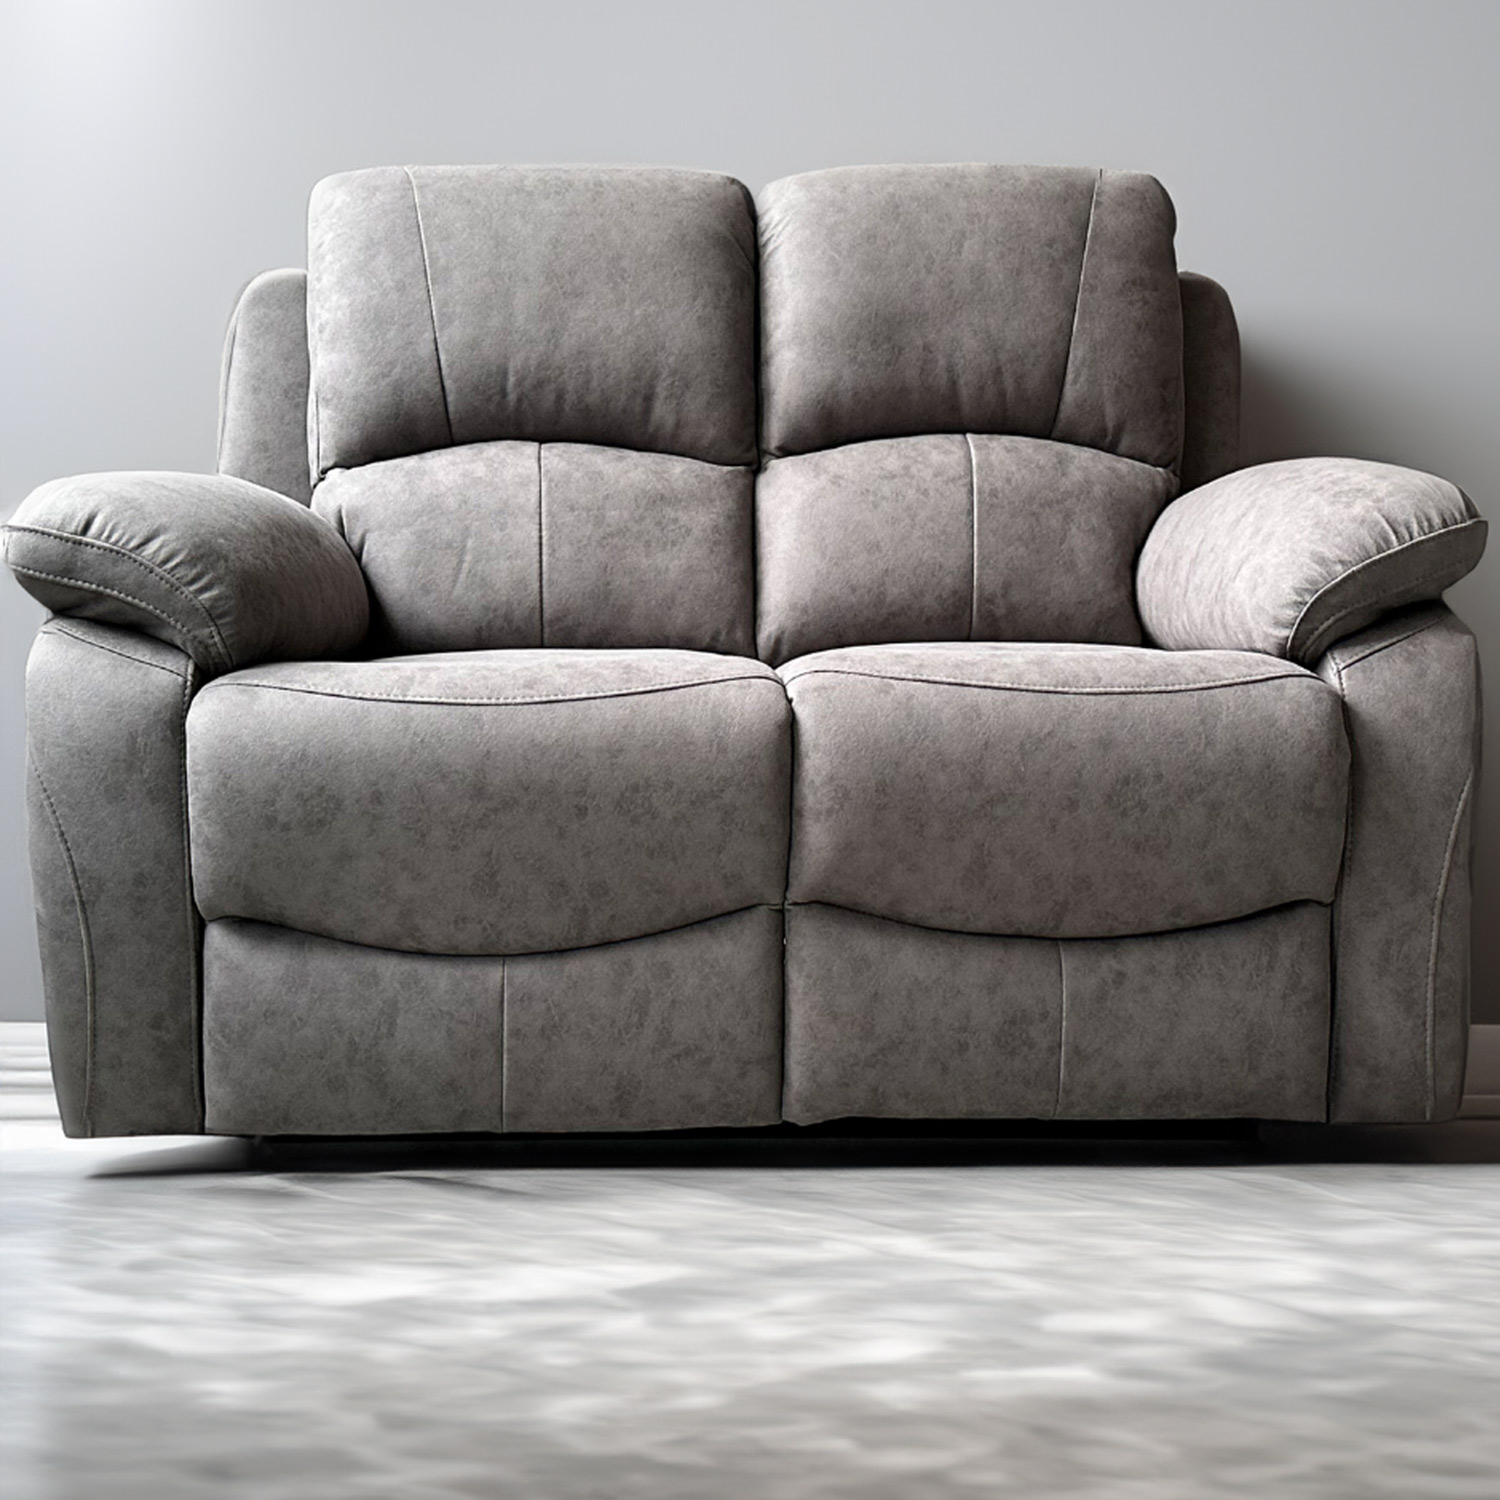 Milano 2 Seater Charcoal Fabric Manual Recliner Sofa Image 1